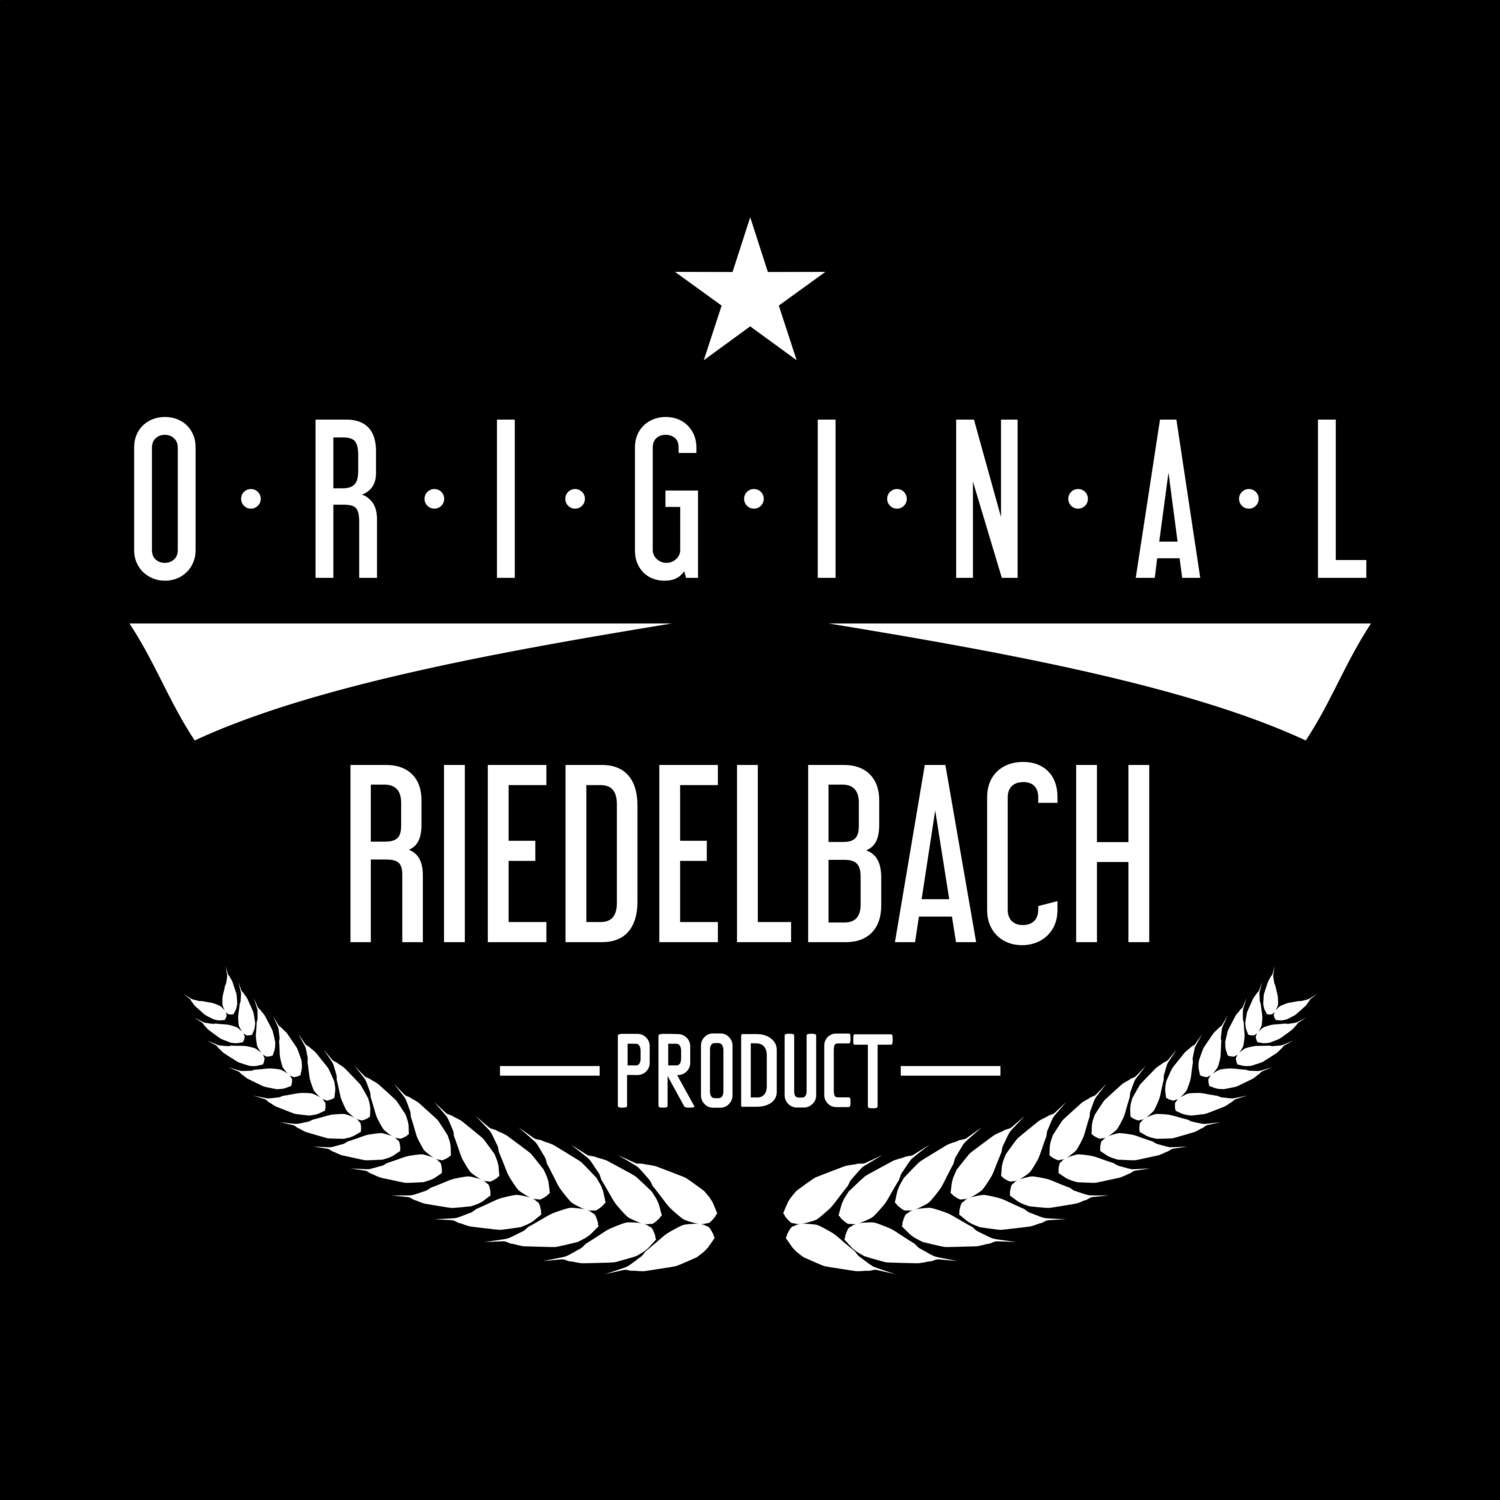 Riedelbach T-Shirt »Original Product«